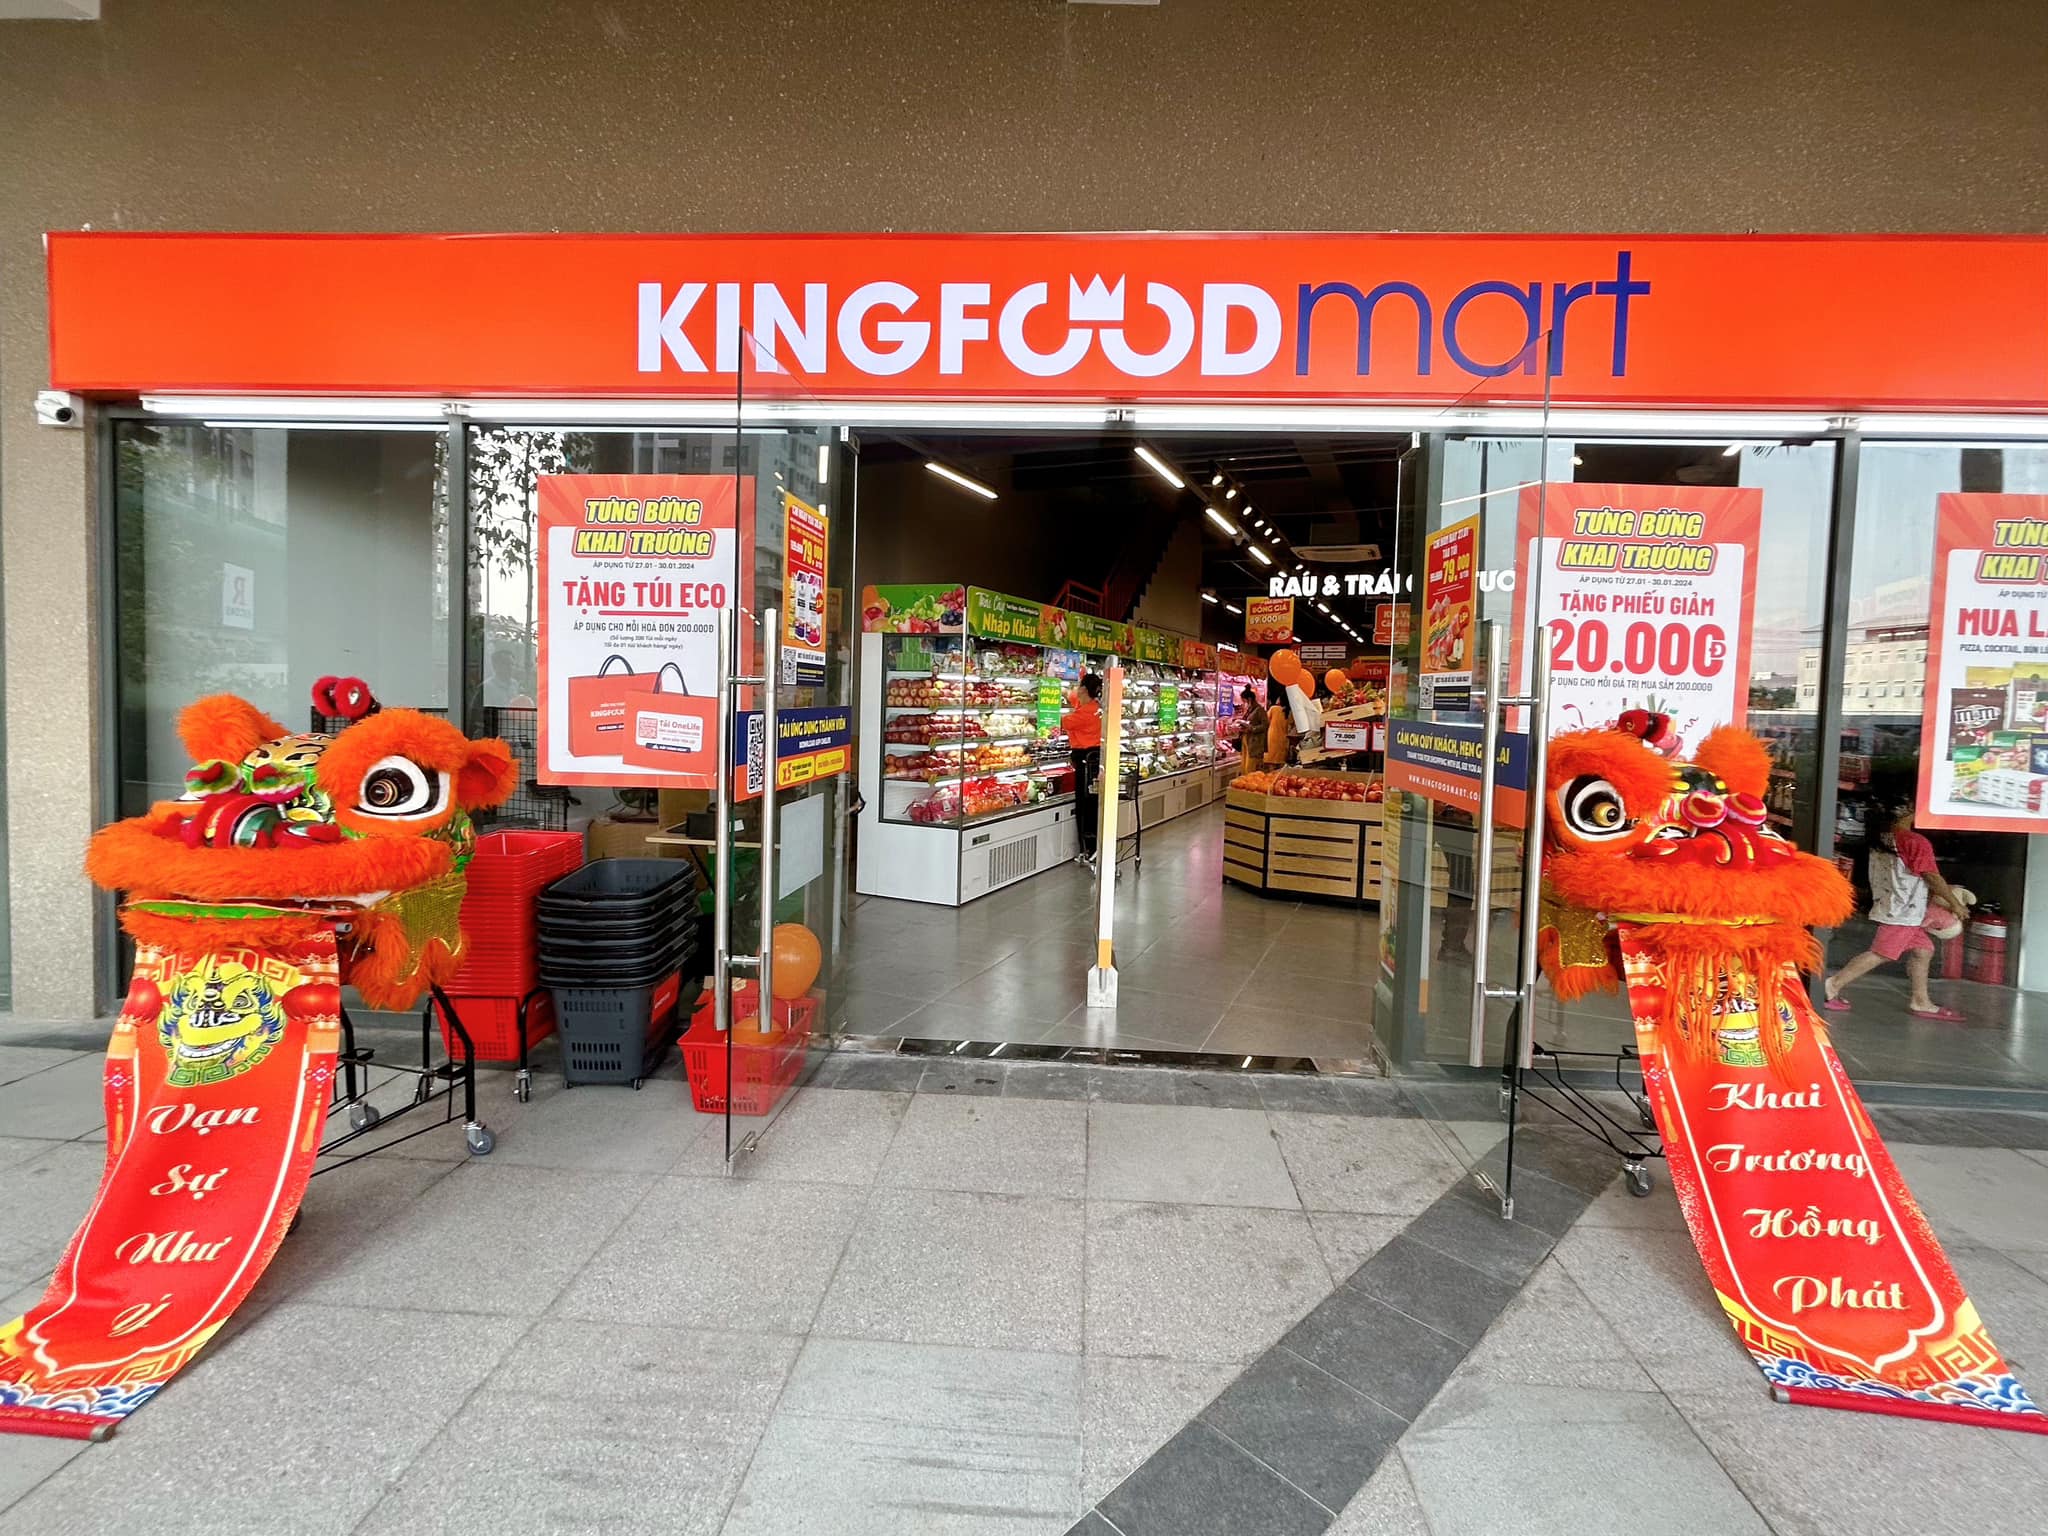 Kingfoodmart Akari